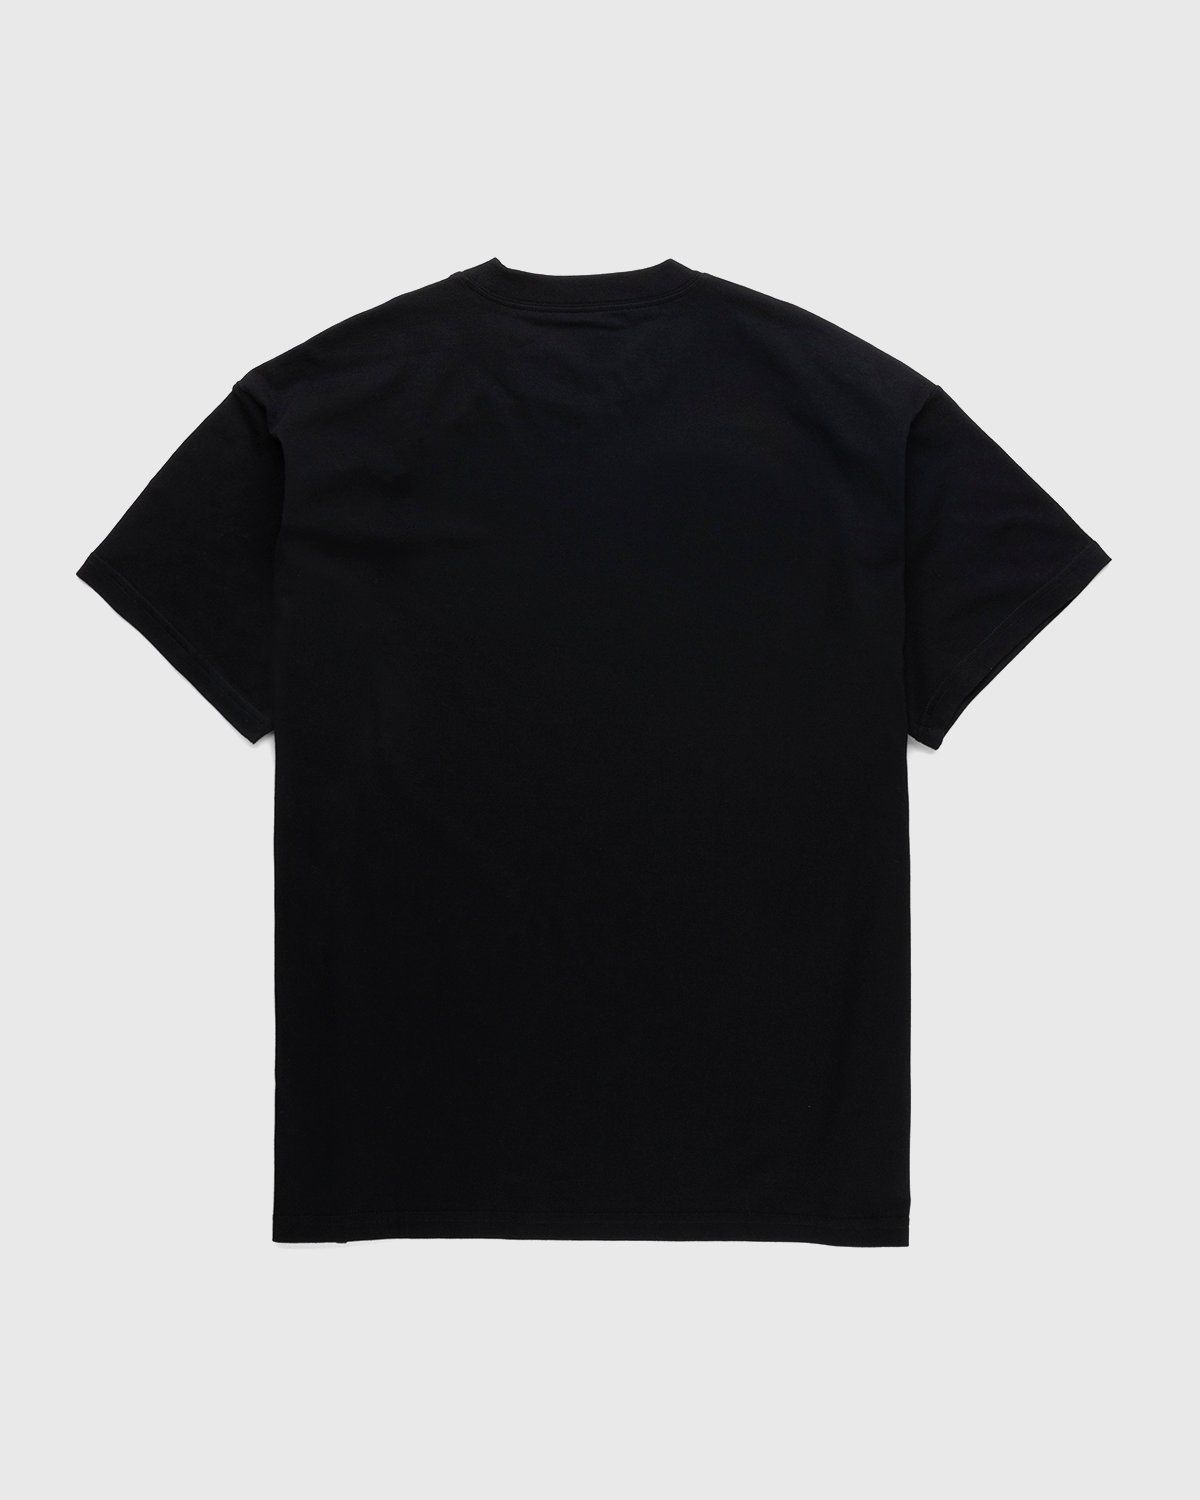 Carhartt WIP – Meatloaf T-Shirt Black - T-shirts - Black - Image 2